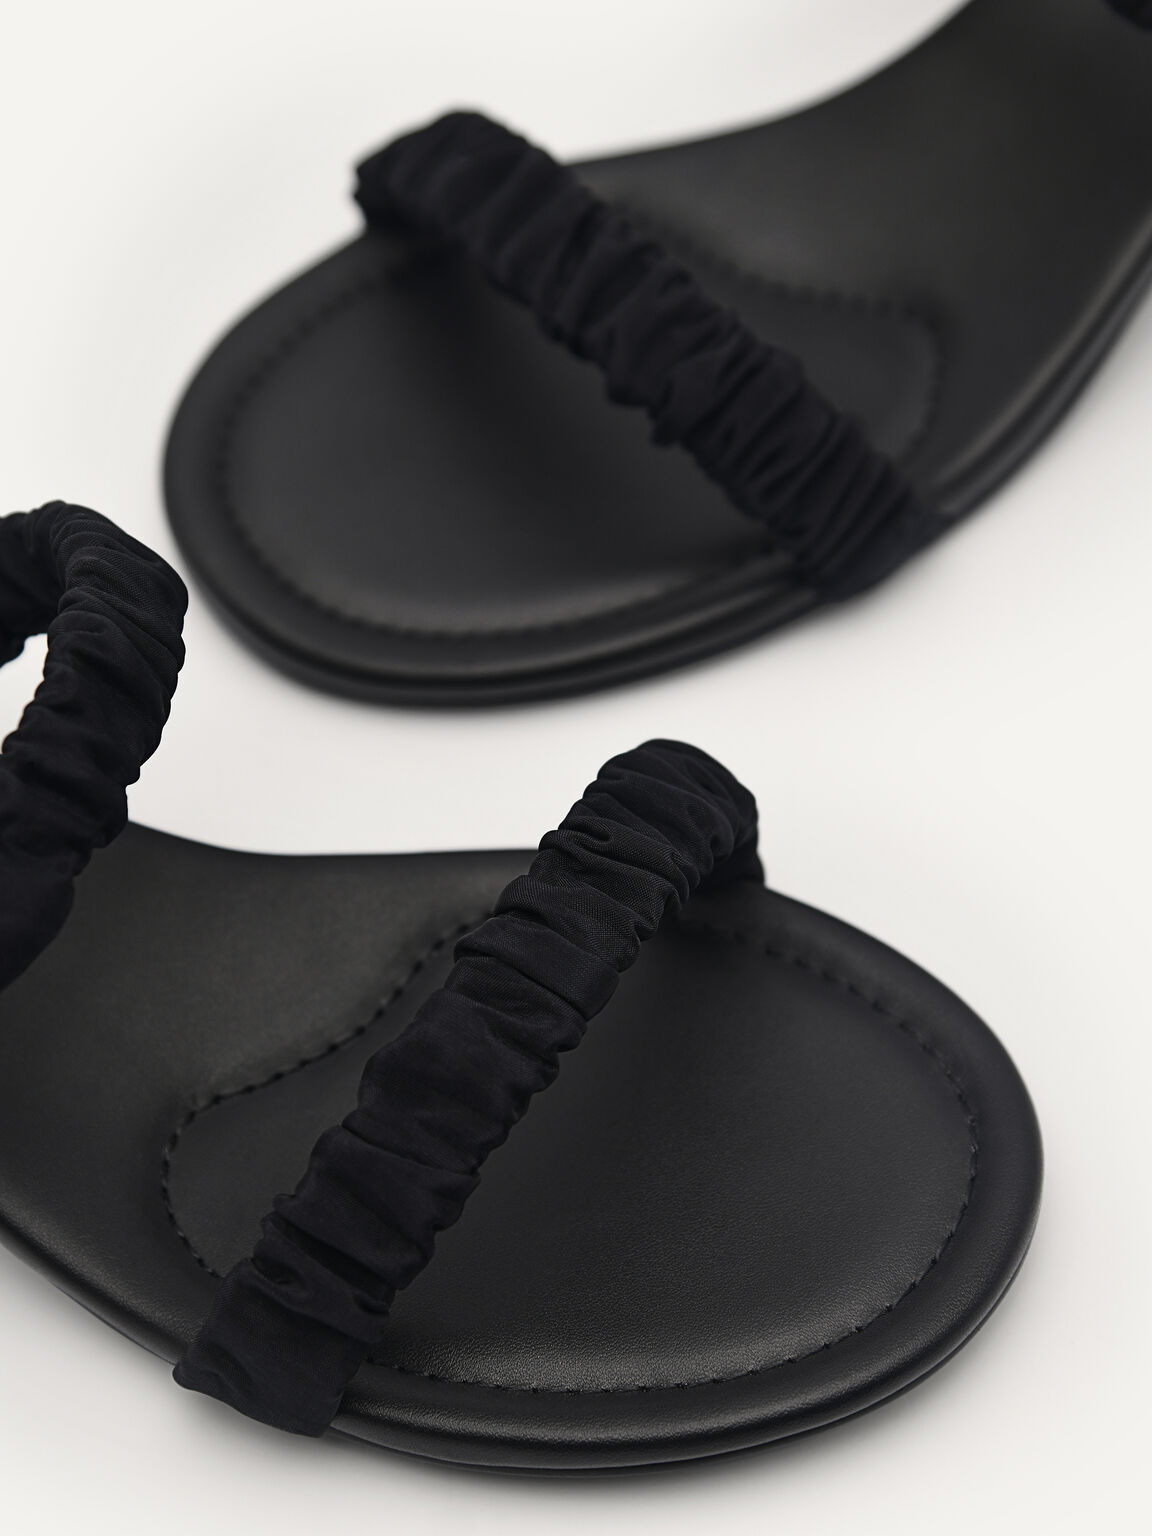 Taffeta Fraise Heeled Sandals, Black